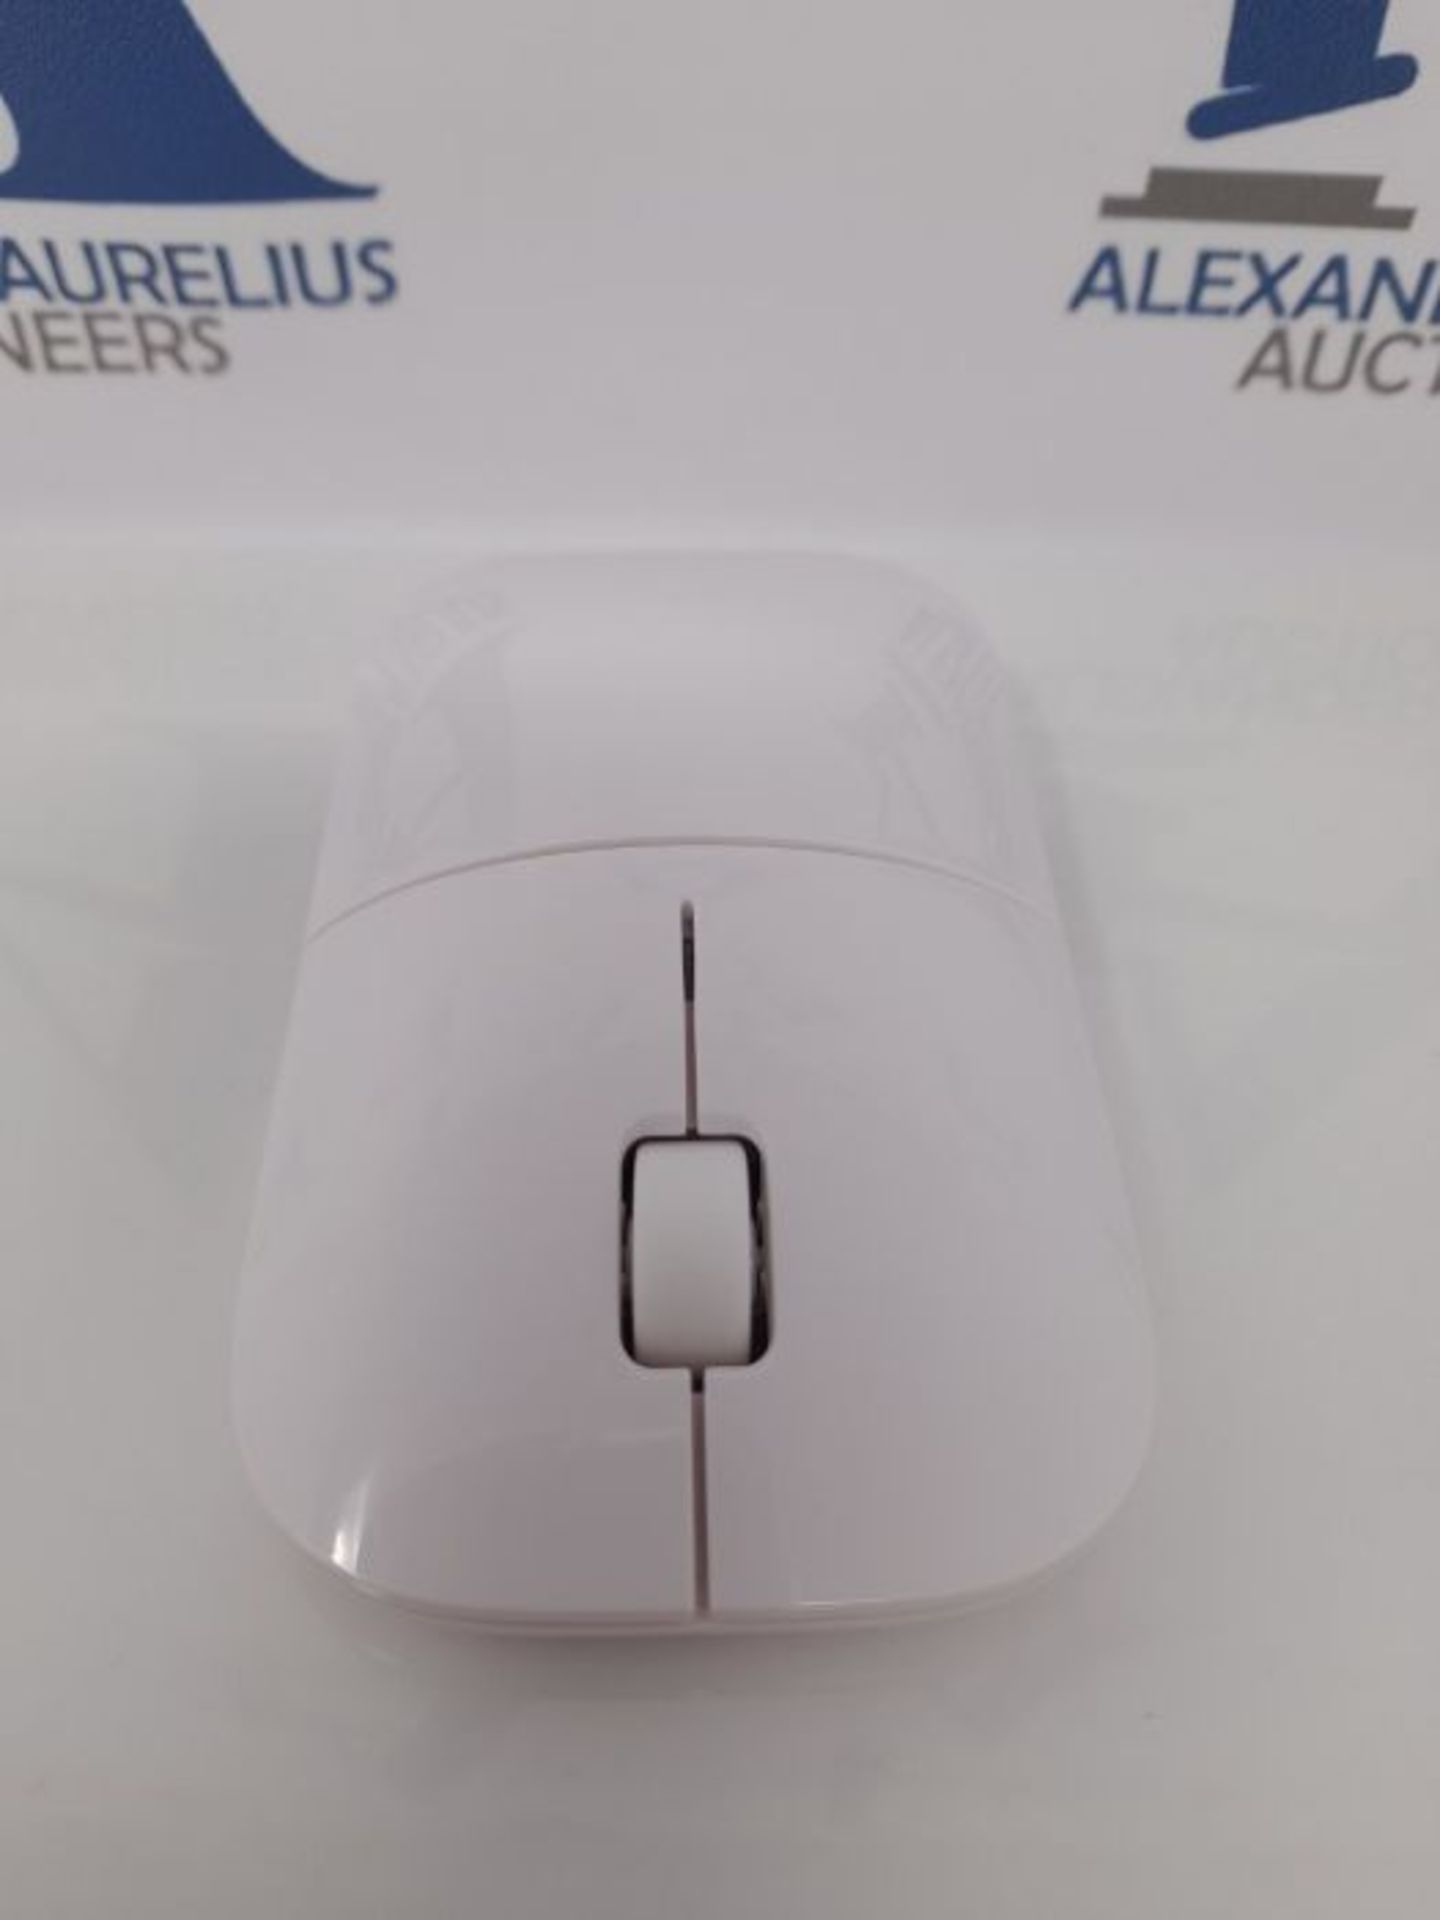 HP Z3700 White 2.4 GHz USB Slim Wireless Mouse with Blue LED1200 DPI Optical Sensor, U - Image 2 of 3